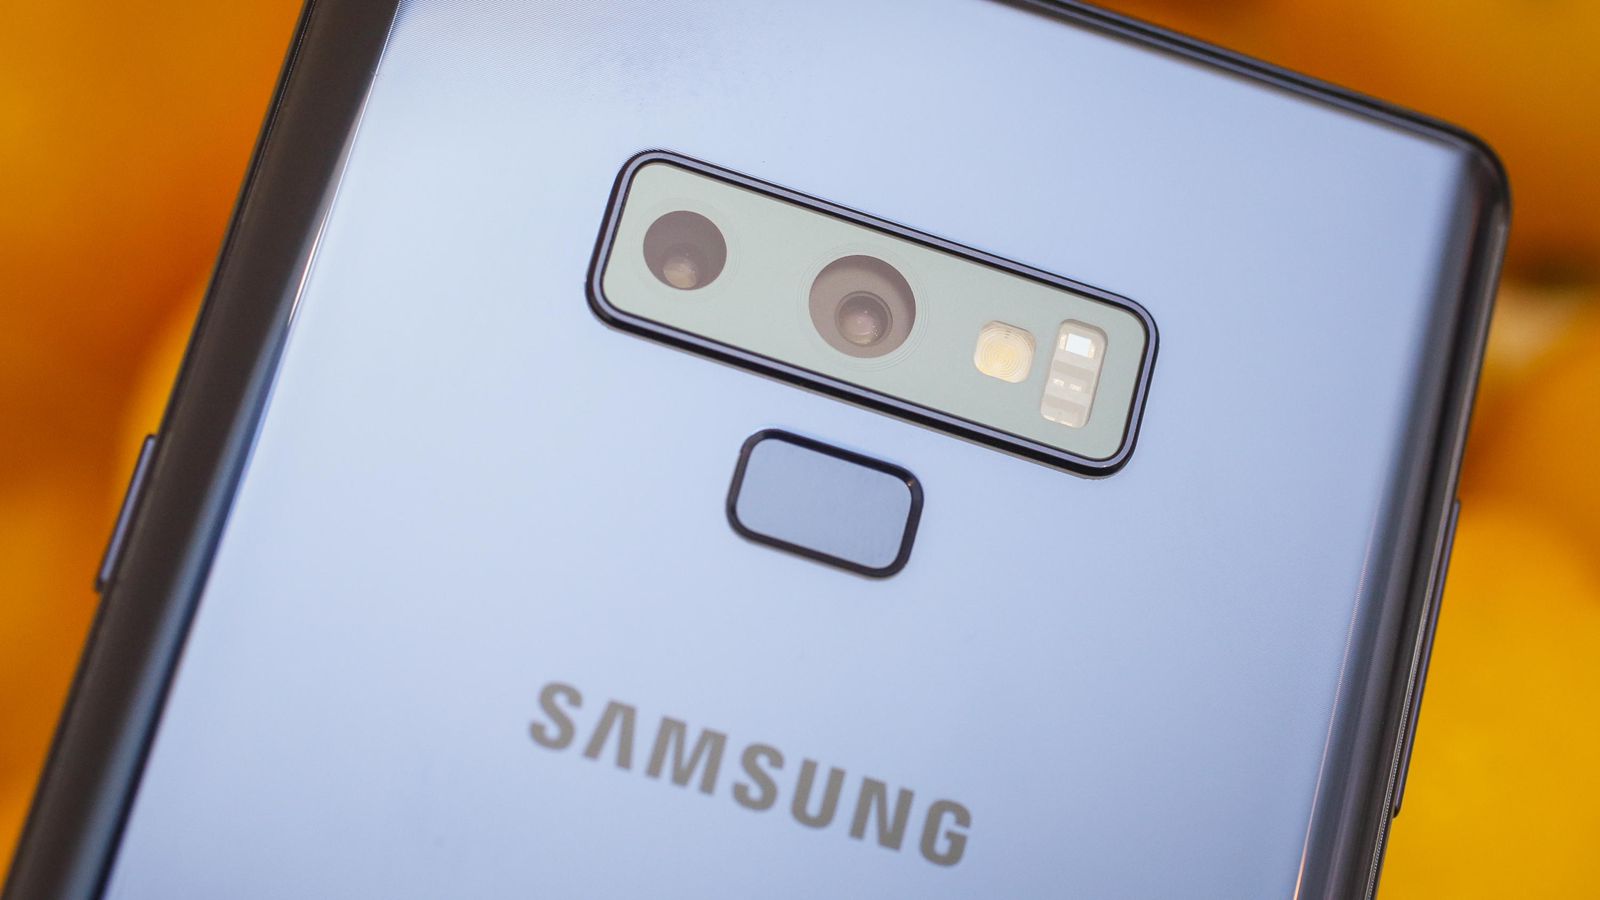 ماذا تغير في هاتف Samsung Galaxy Note 9 الجديد عن هاتف Samsung Galaxy Note 8